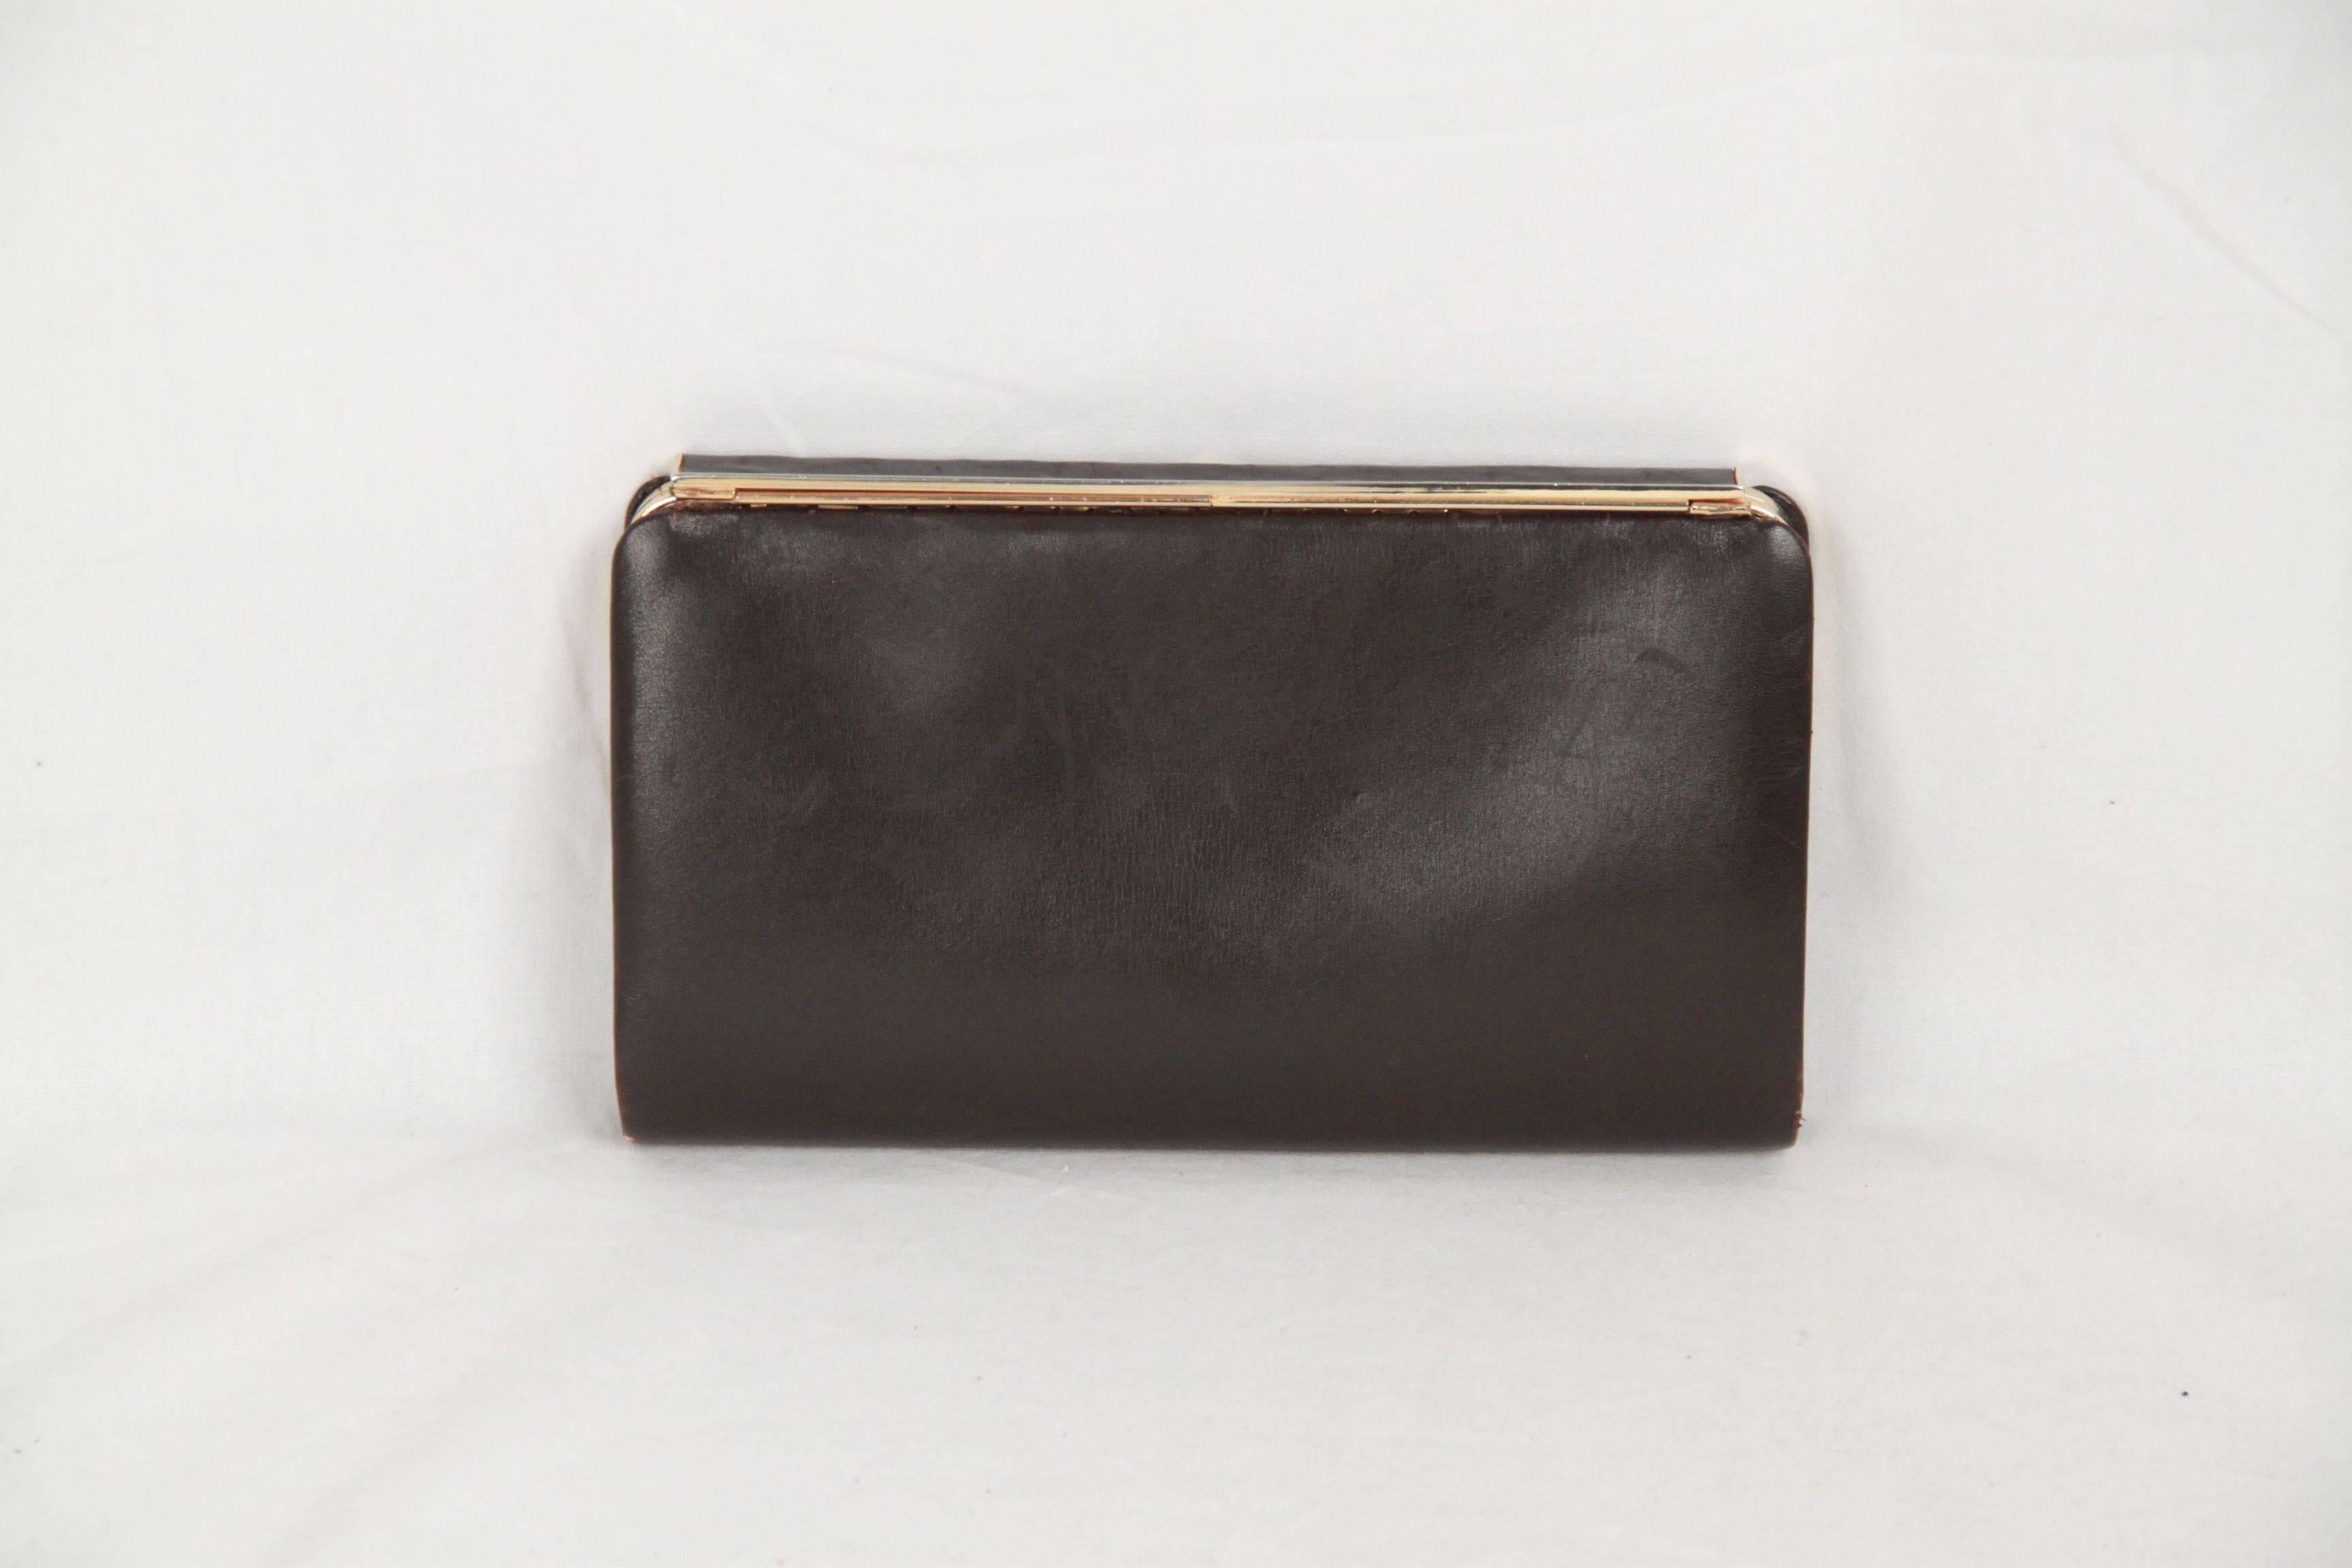 Black GUCCI VINTAGE Brown Leather CLUTCH Handbag